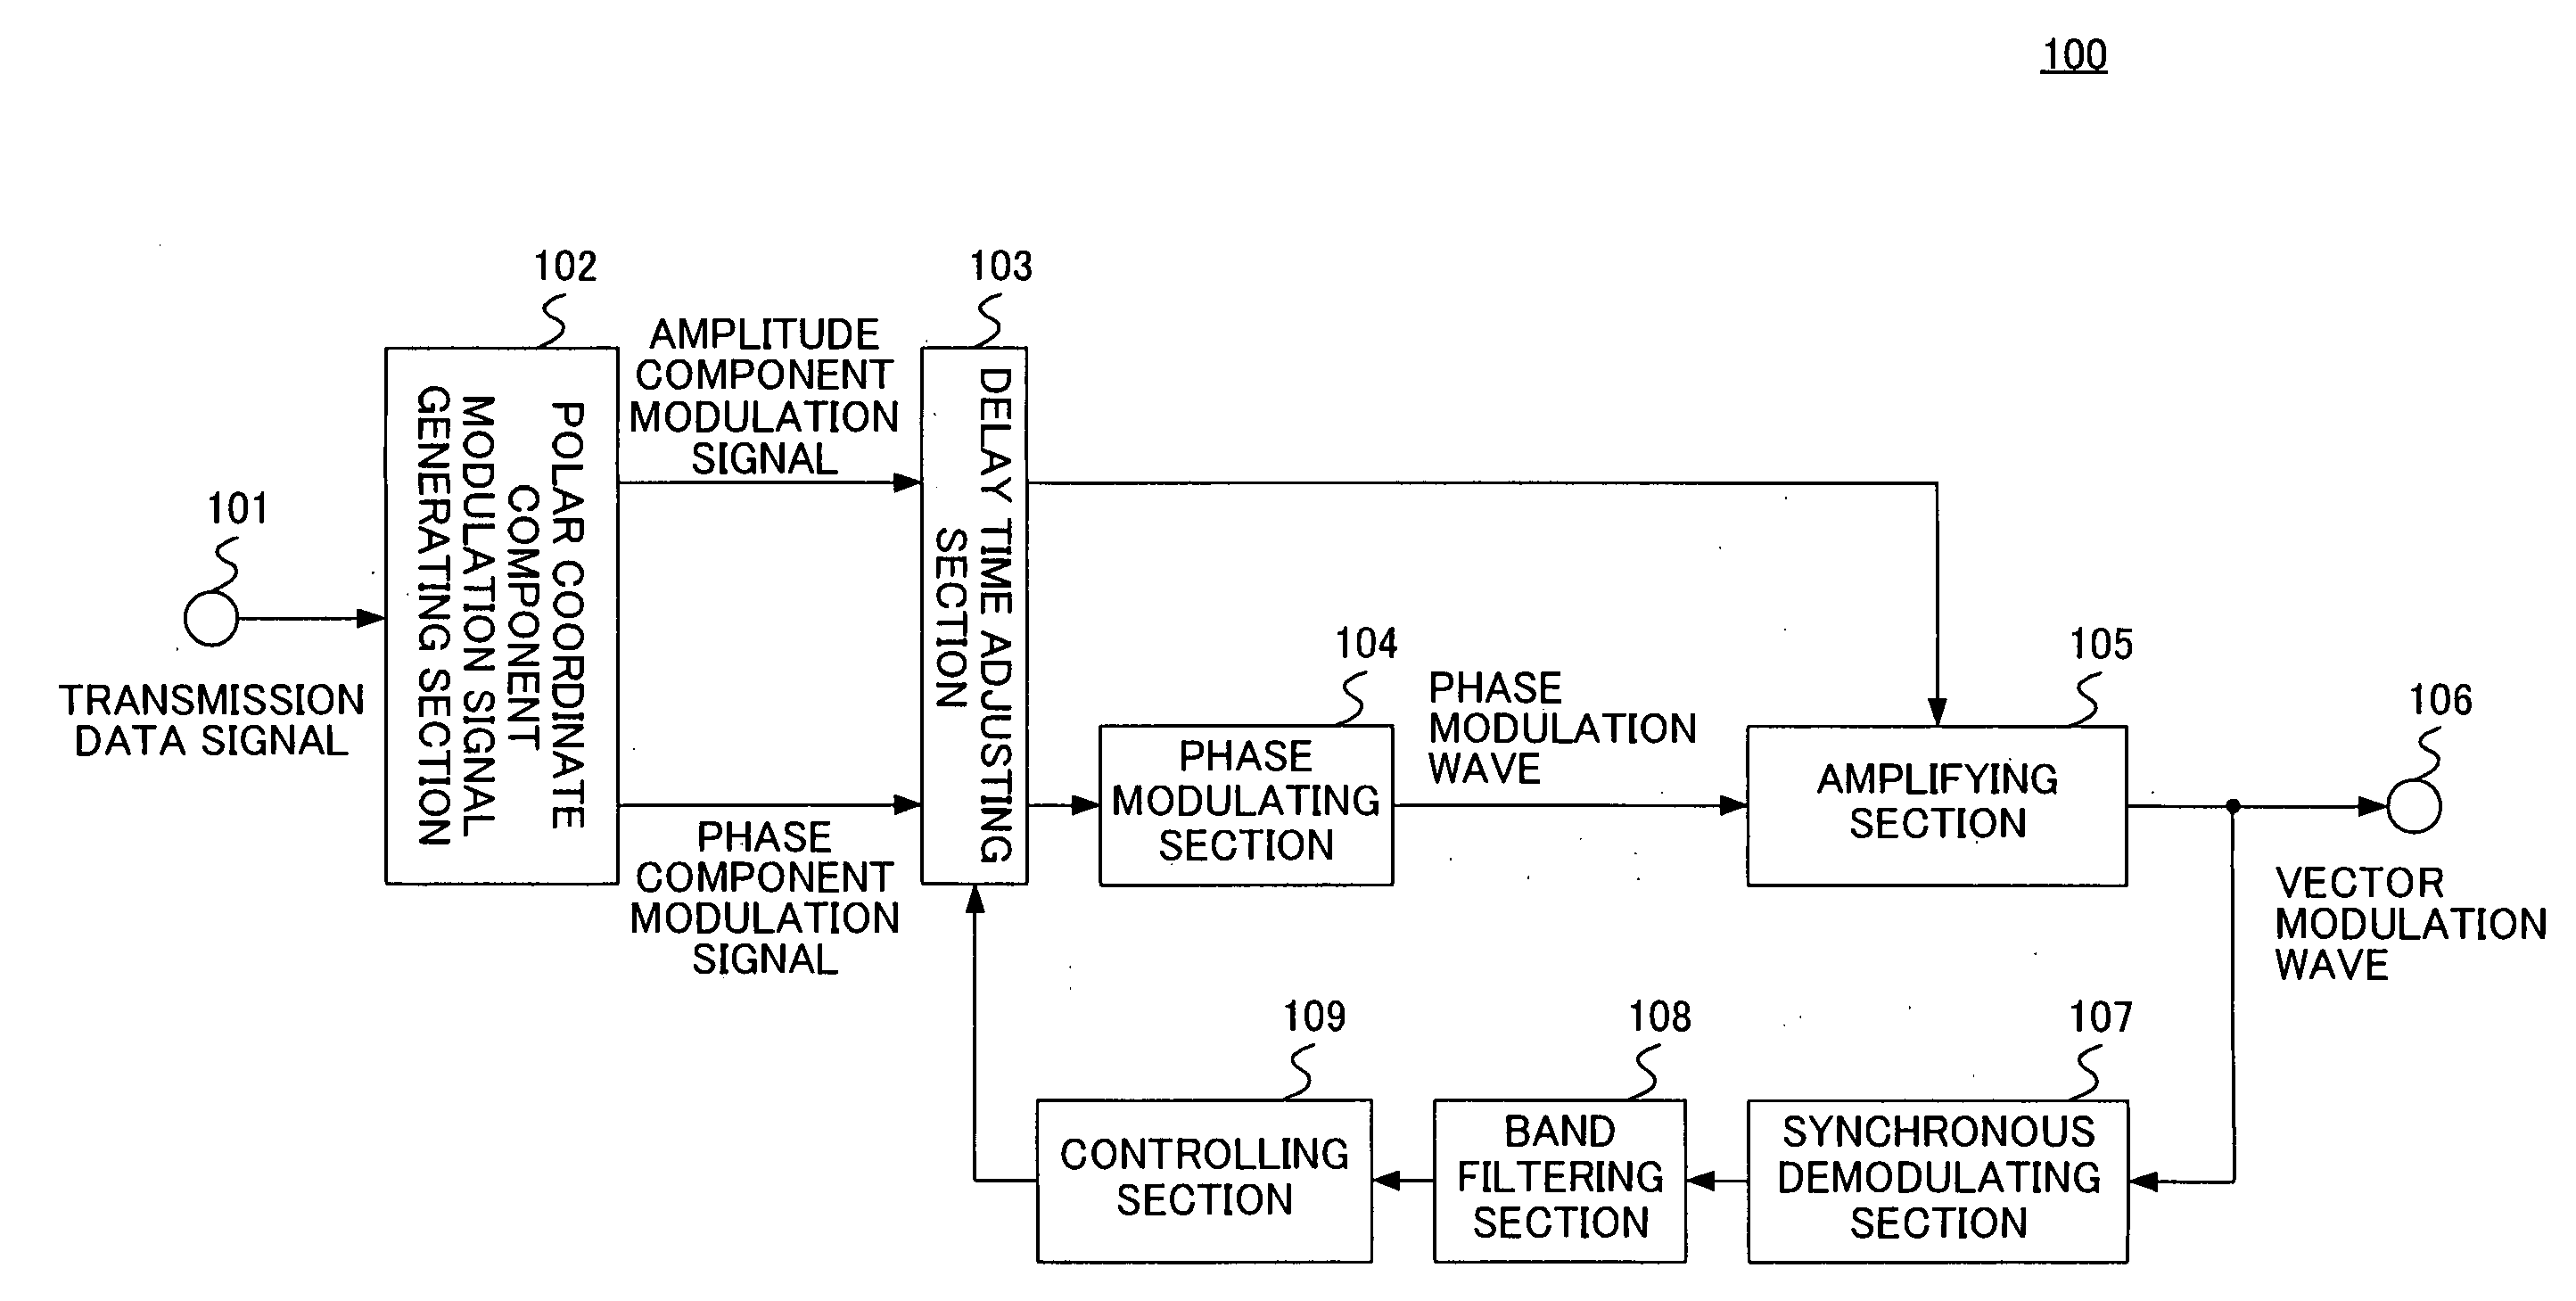 Transmission apparatus, communication apparatus and mobile radio apparatus